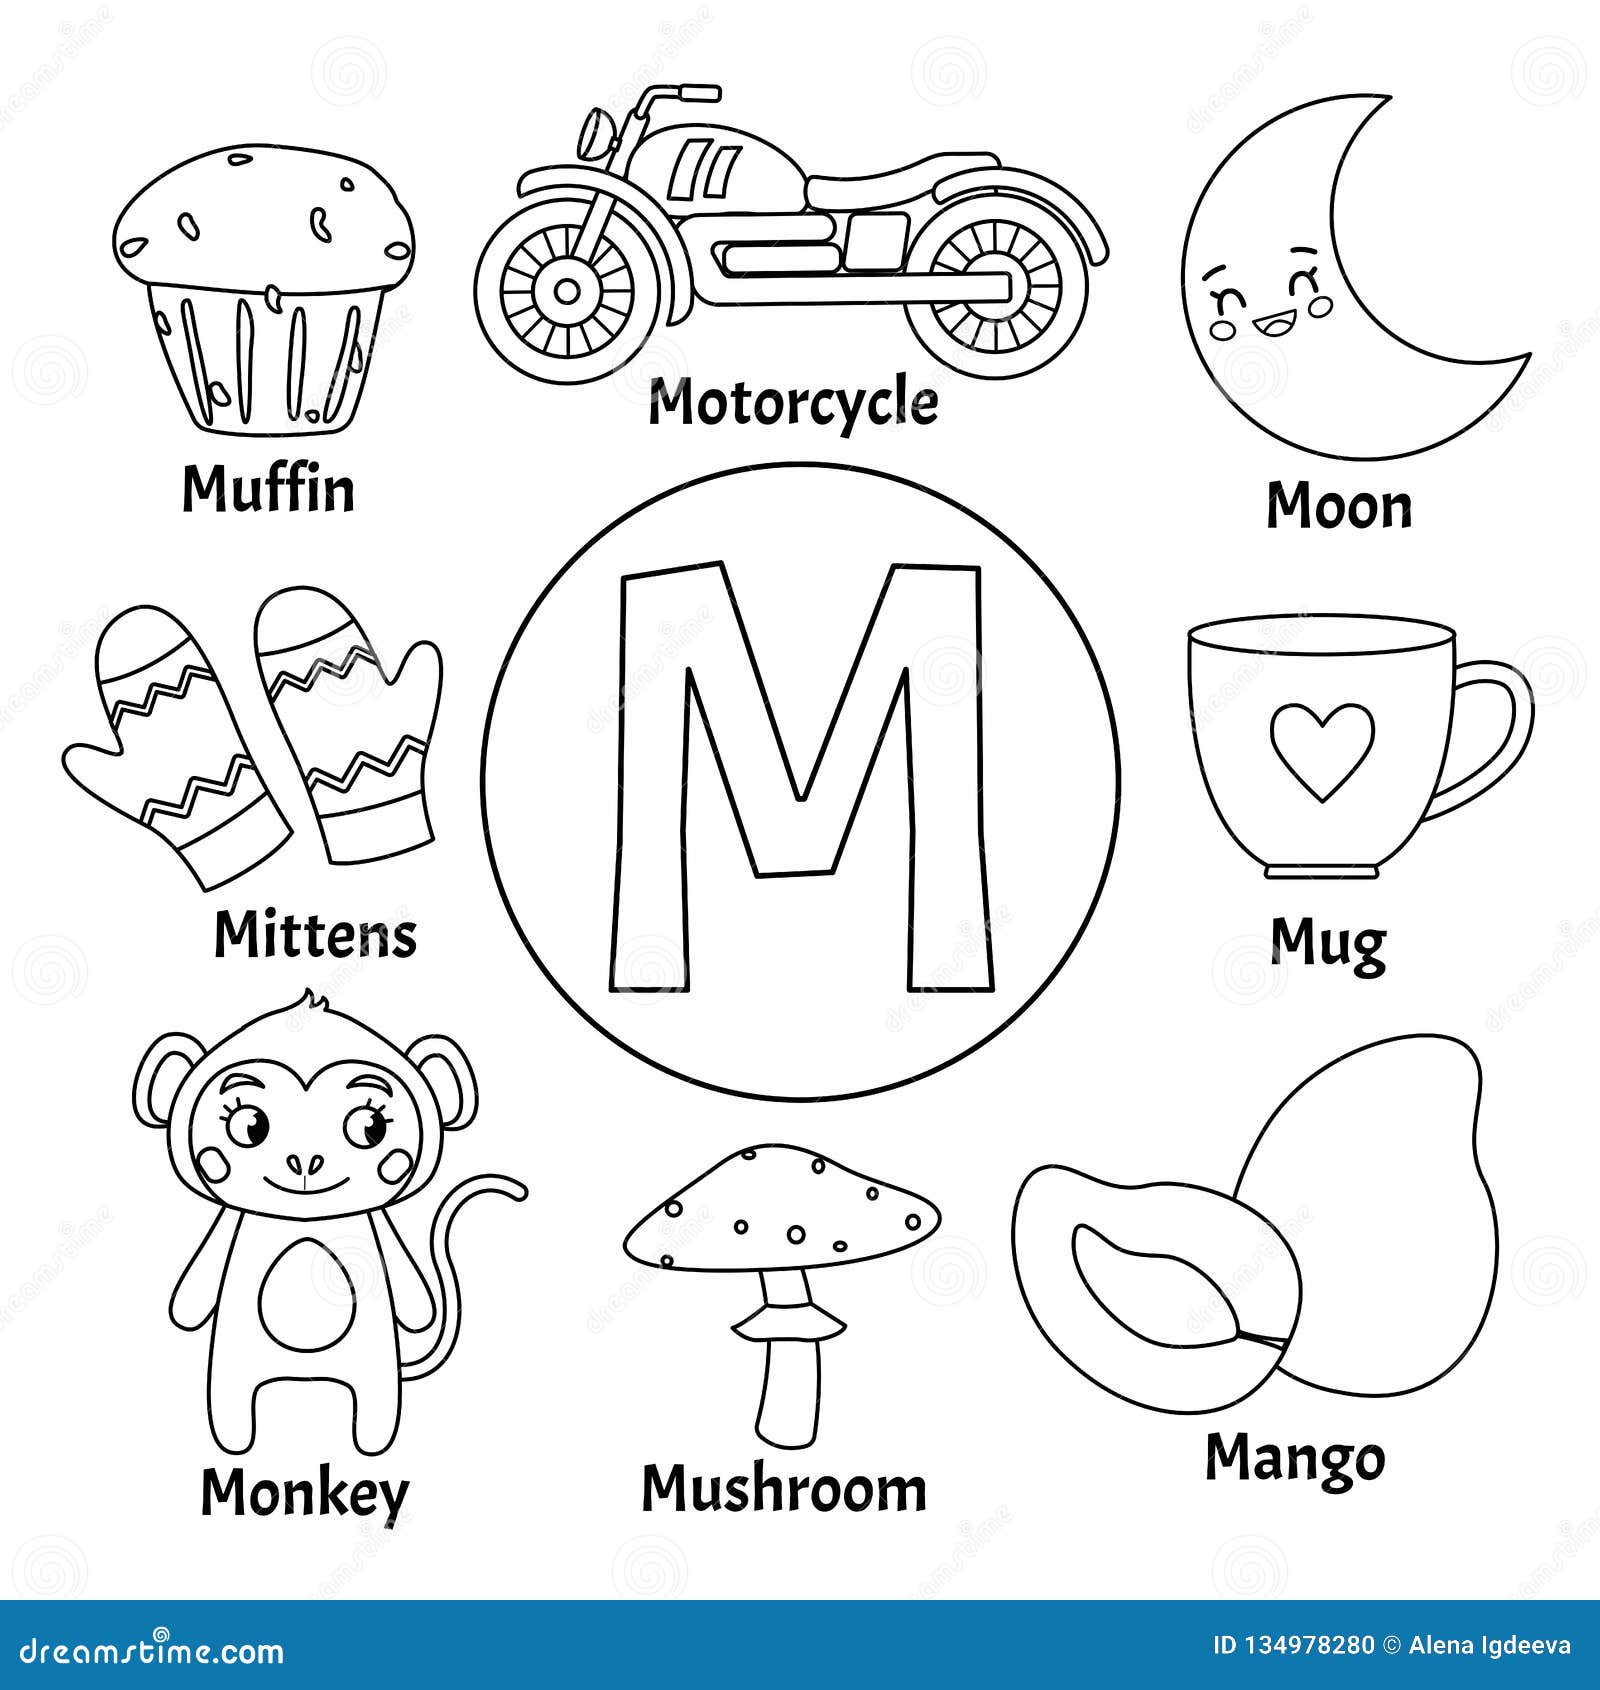 Vector alphabet letter m coloring page mushroom stock illustrations â vector alphabet letter m coloring page mushroom stock illustrations vectors clipart